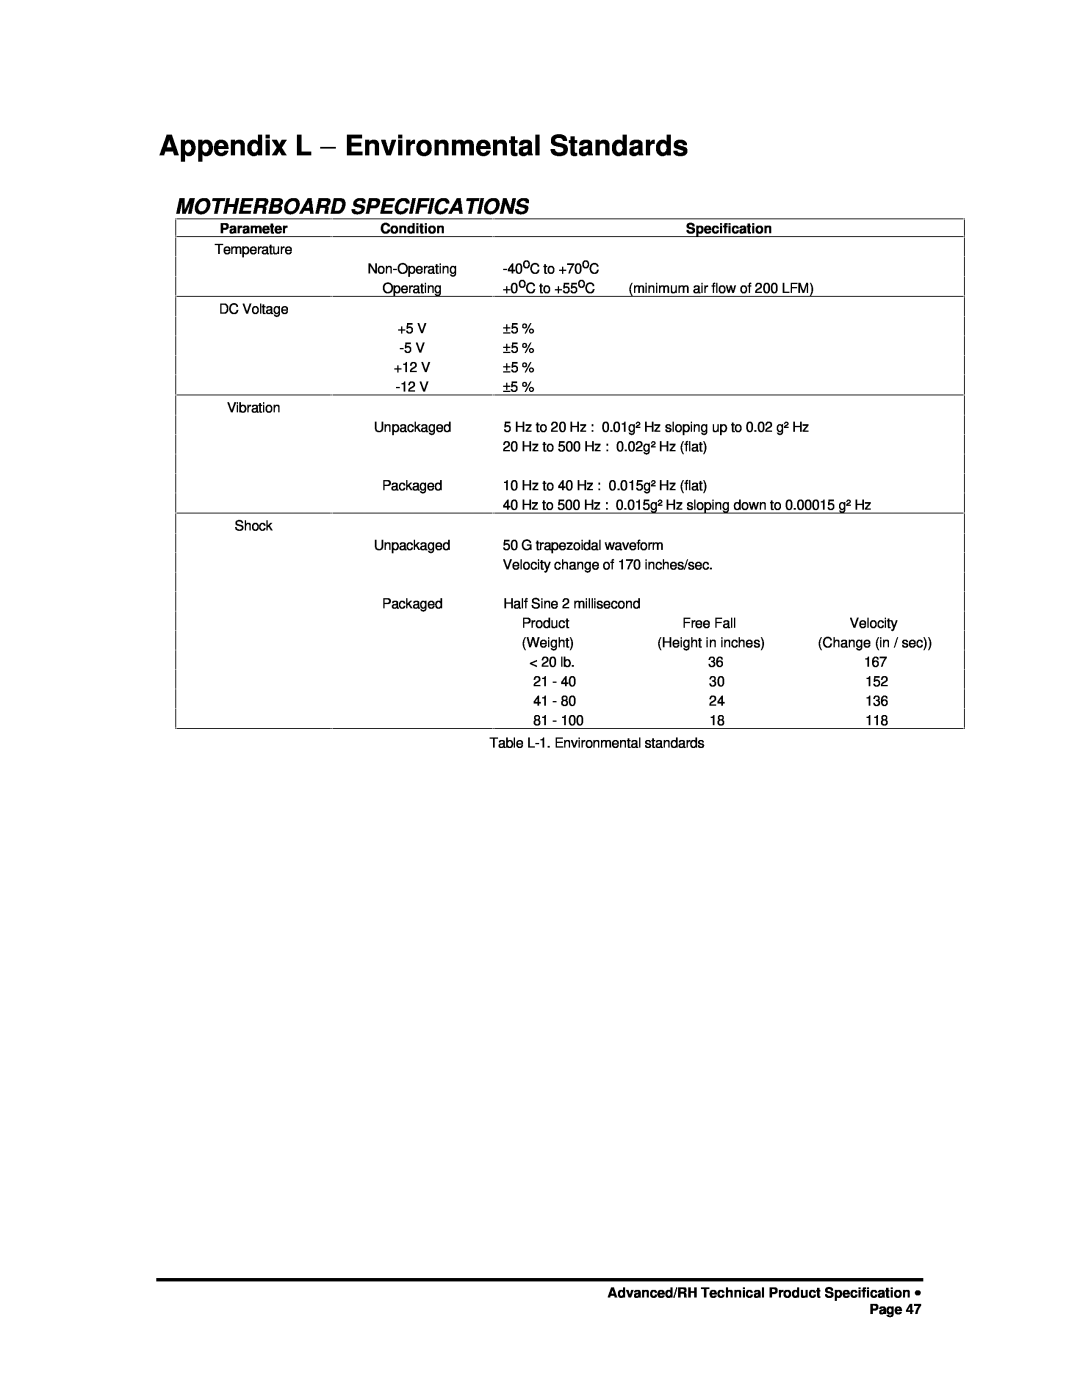 Intel 281809-003 manual Appendix L − Environmental Standards, Motherboard Specifications 